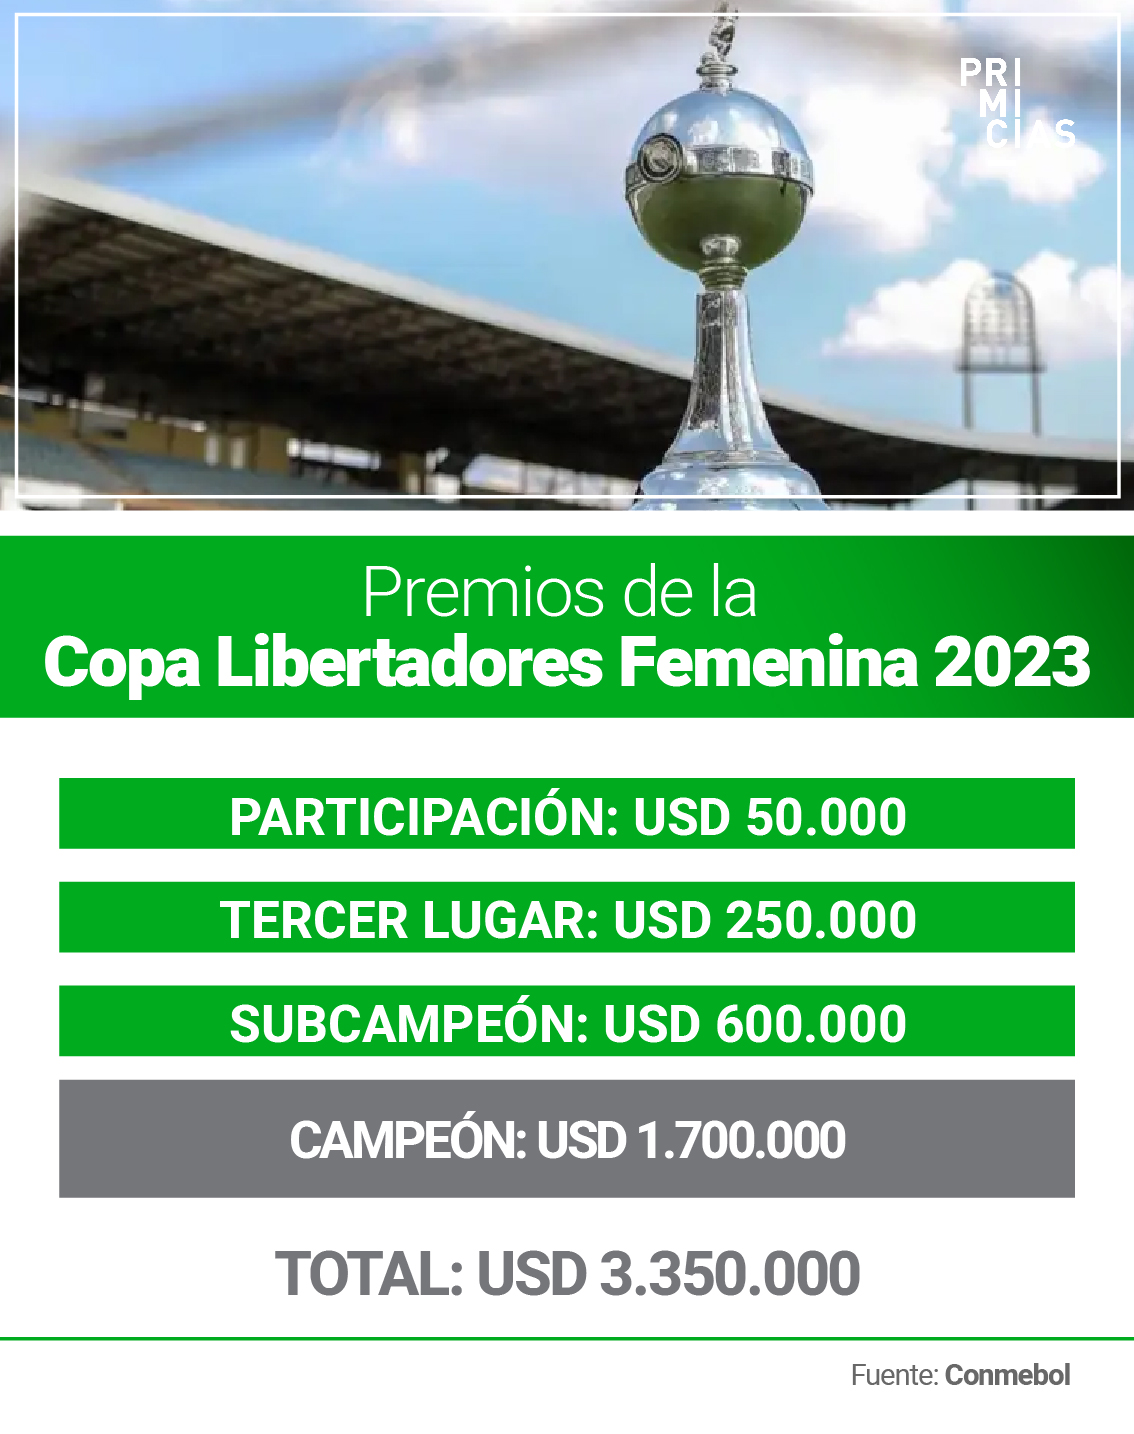 Premios Copa Libertadores Femenina 2023